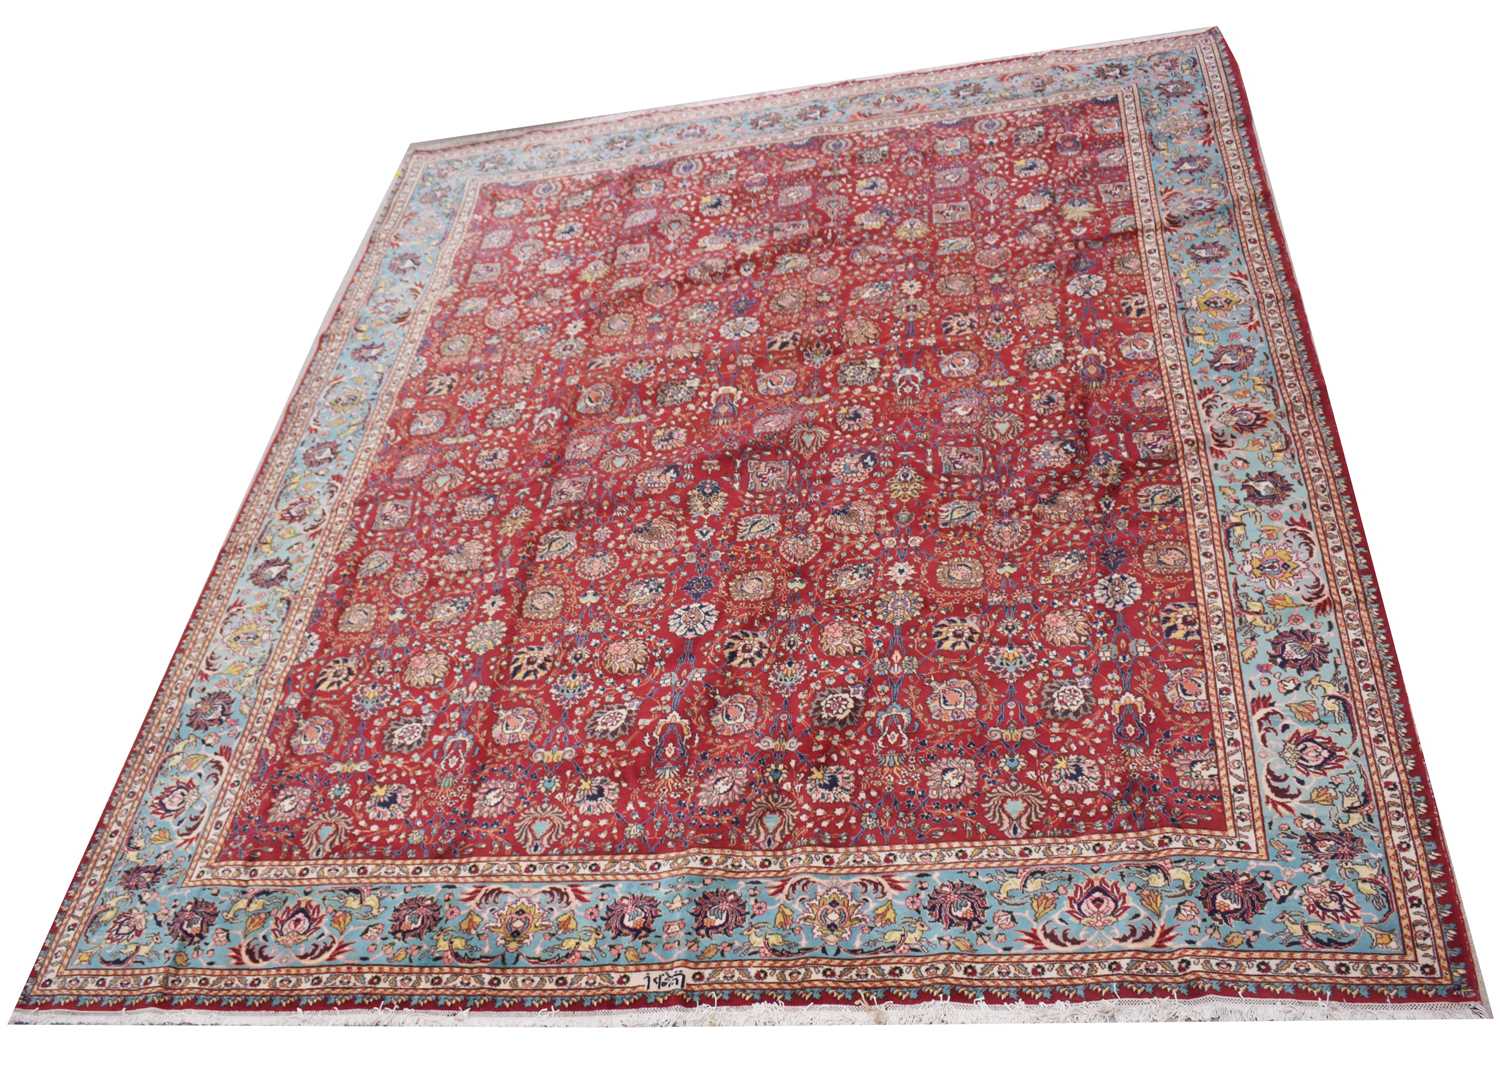 630A - A tabriz carpet